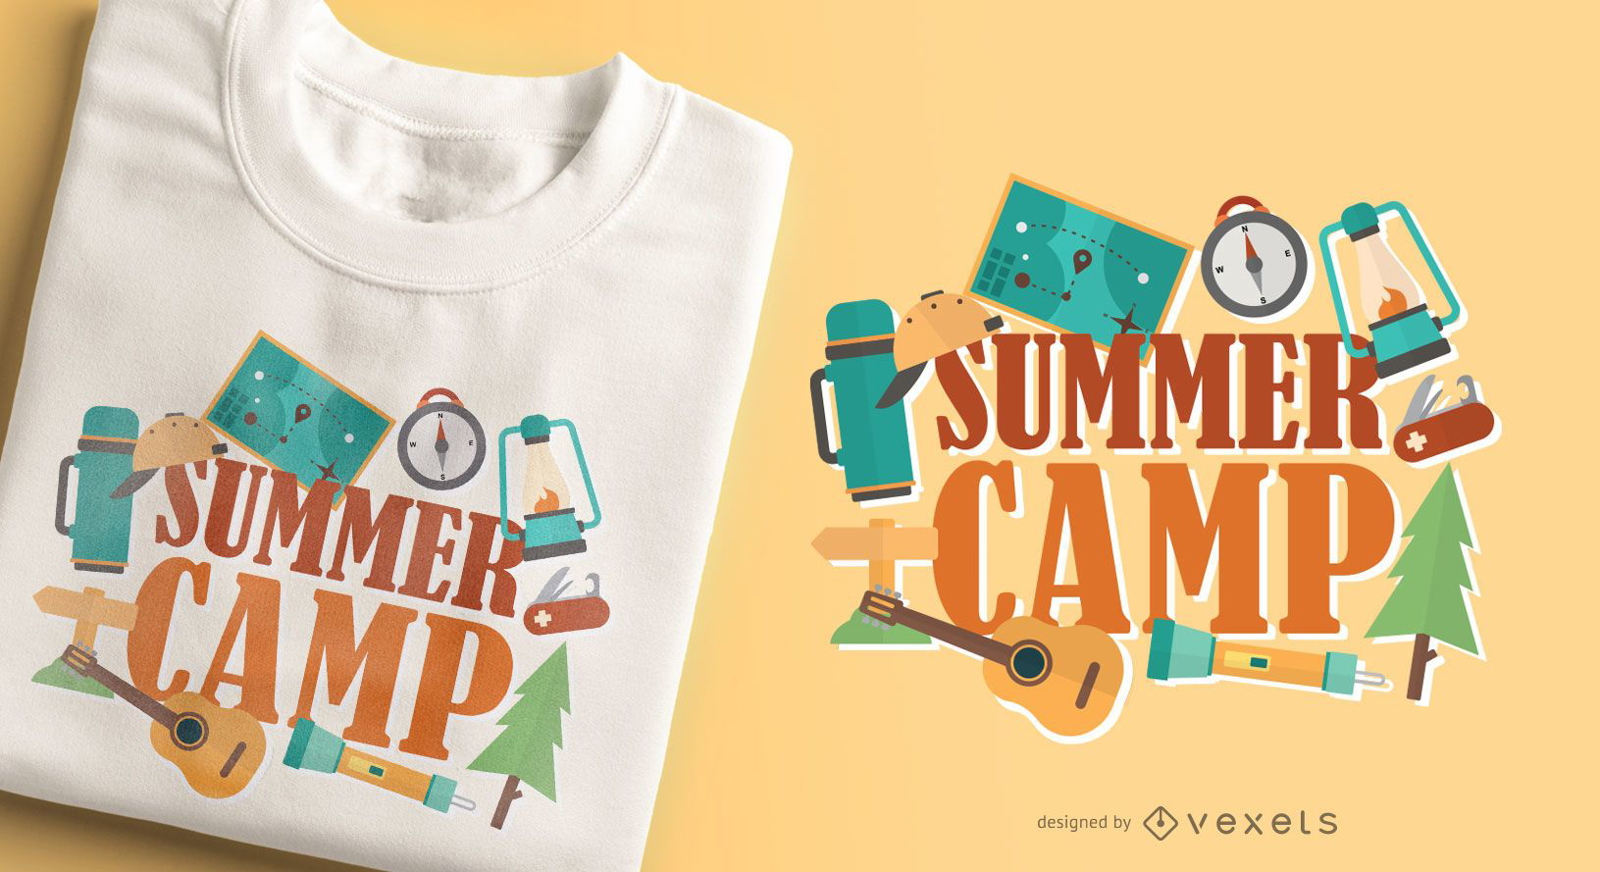 Dise?o de camiseta de campamento de verano.